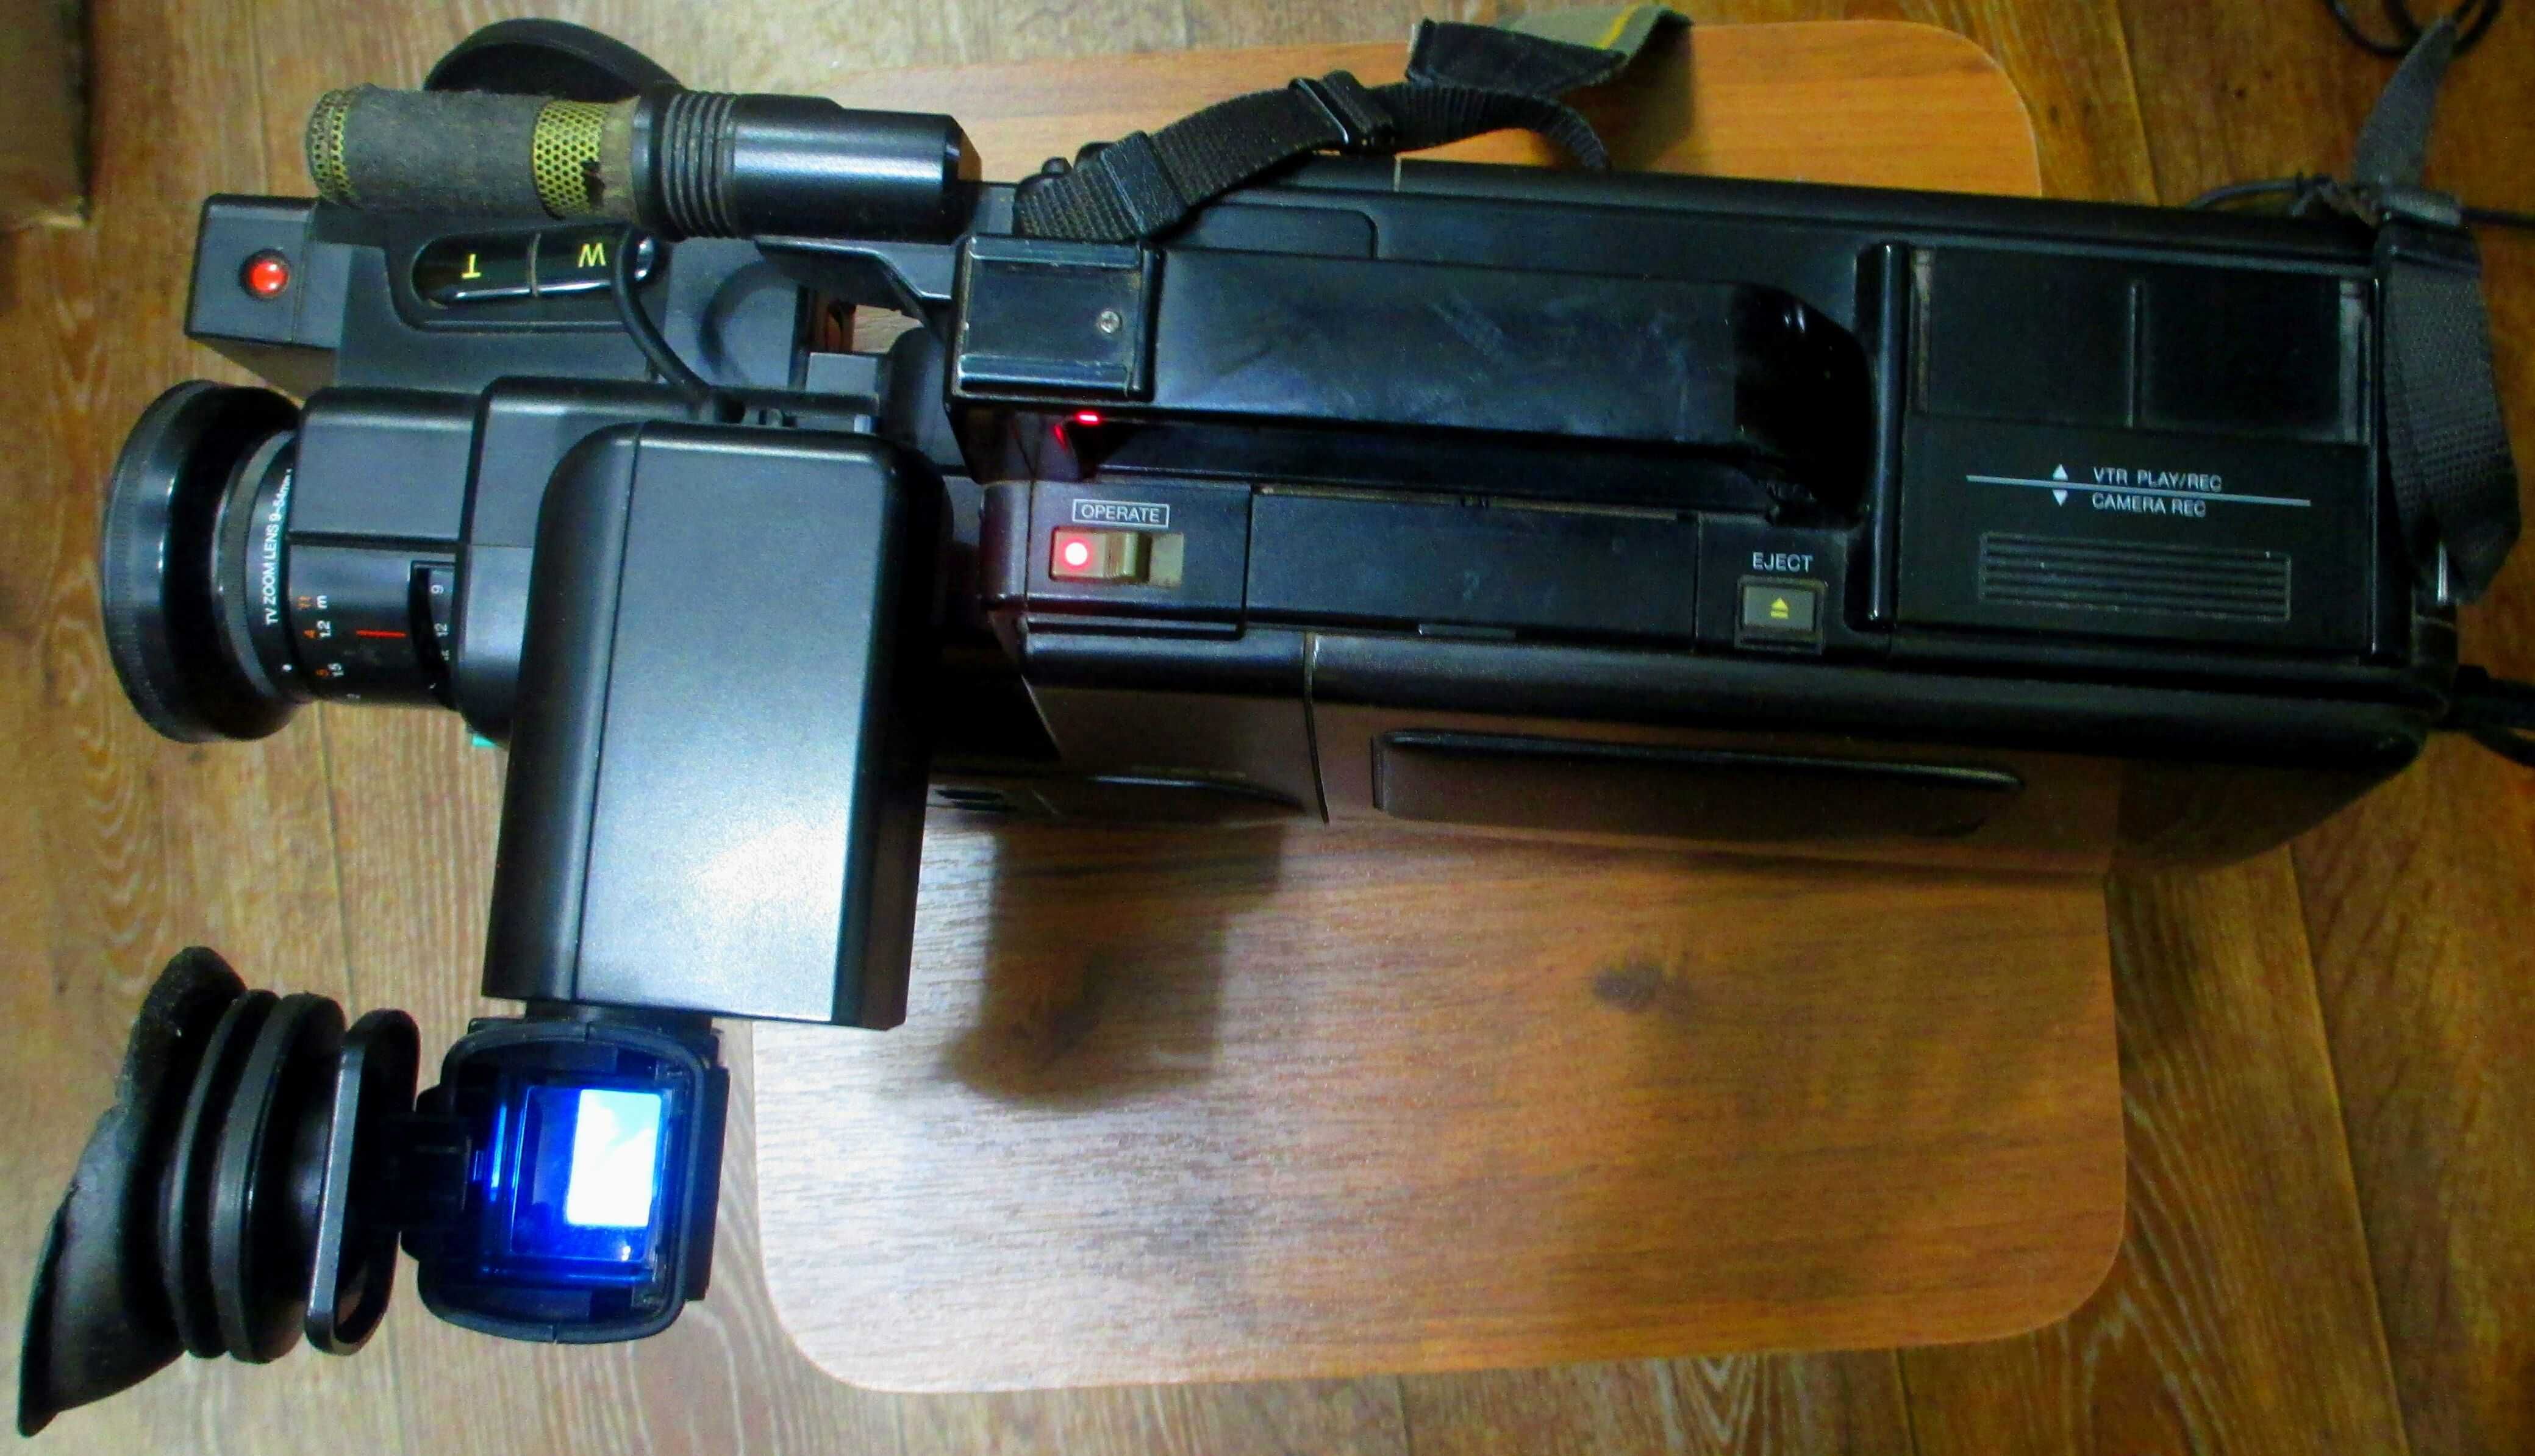 Відеокамера Panasonic VHS професійна  Japan ORIGINAL ЕКСКЛЮЗИВ